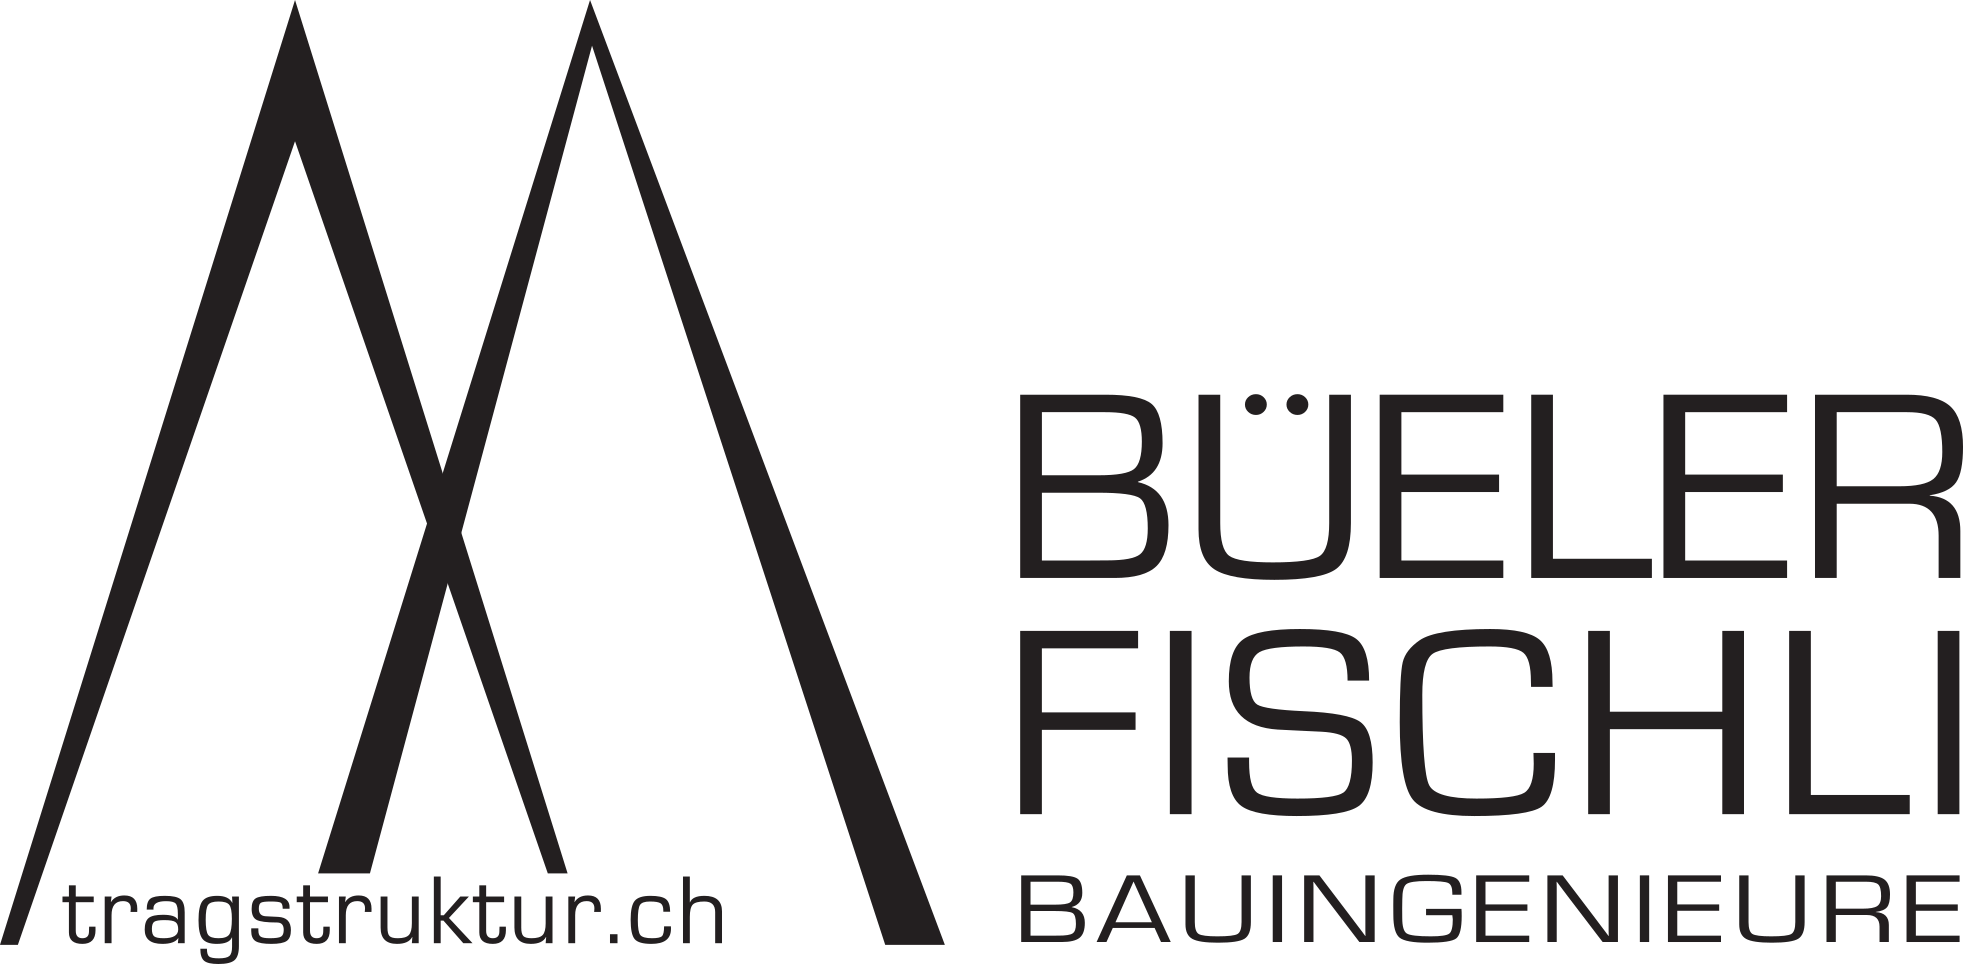 Büeler Fischli Bauingenieure GmbH